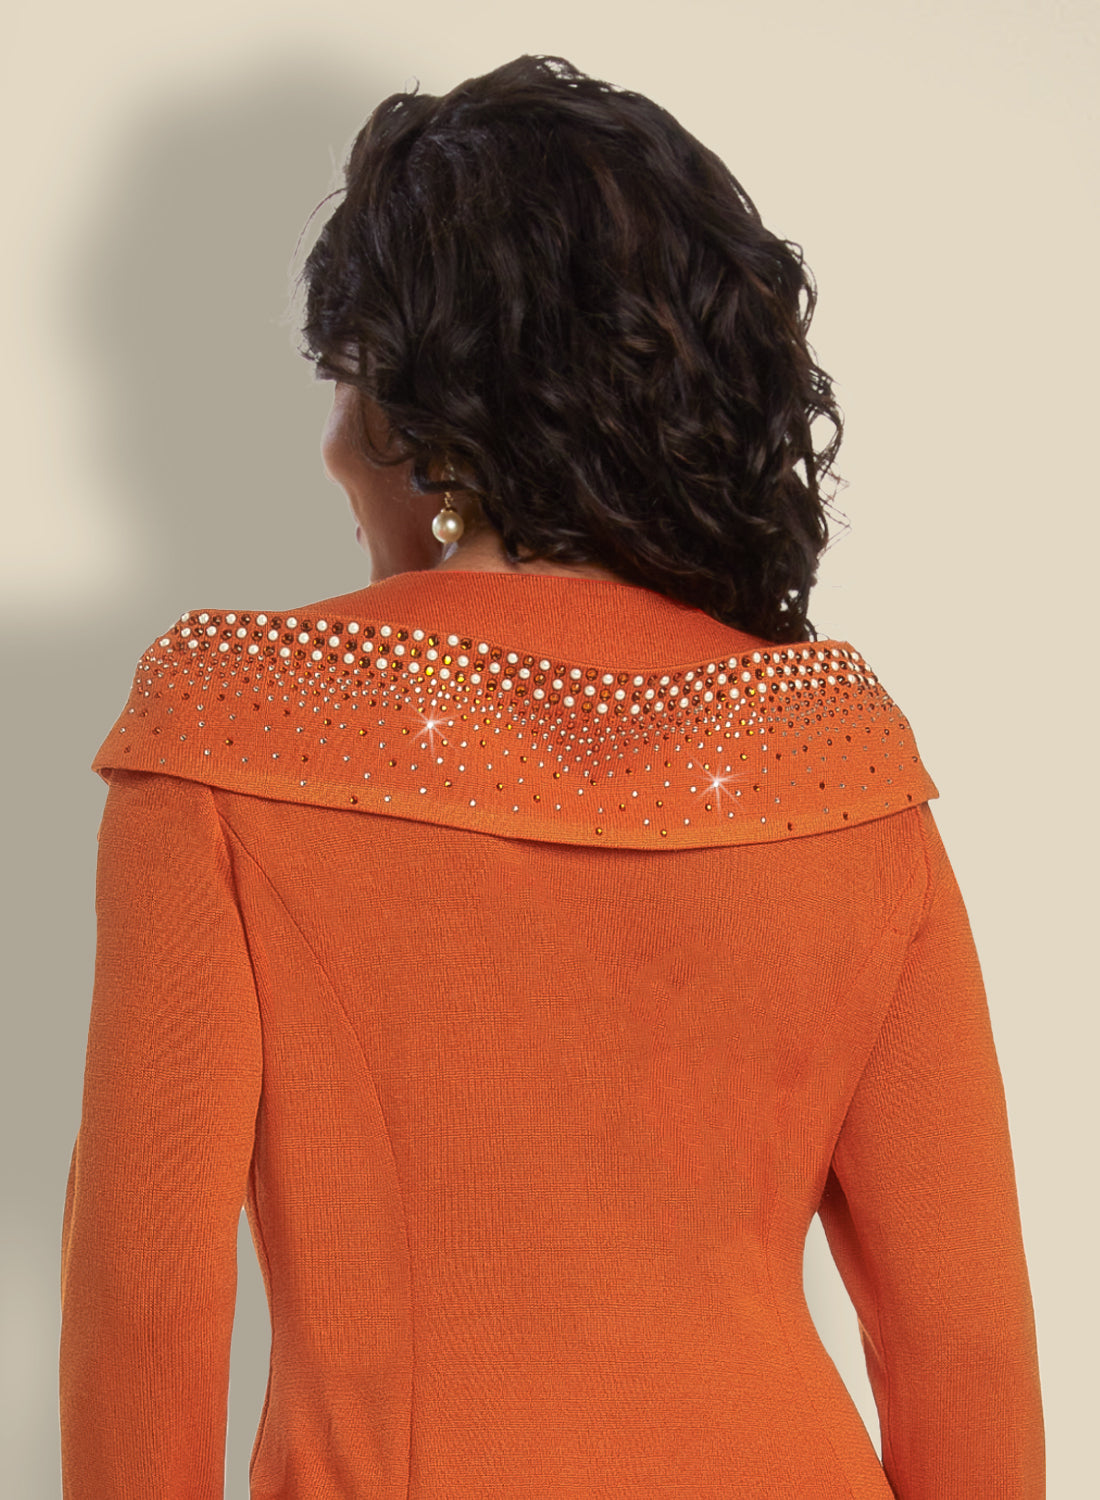 Donna Vinci - 13378 - Orange - Knit 2pc Skirt Suit with Rhinestone Detailing